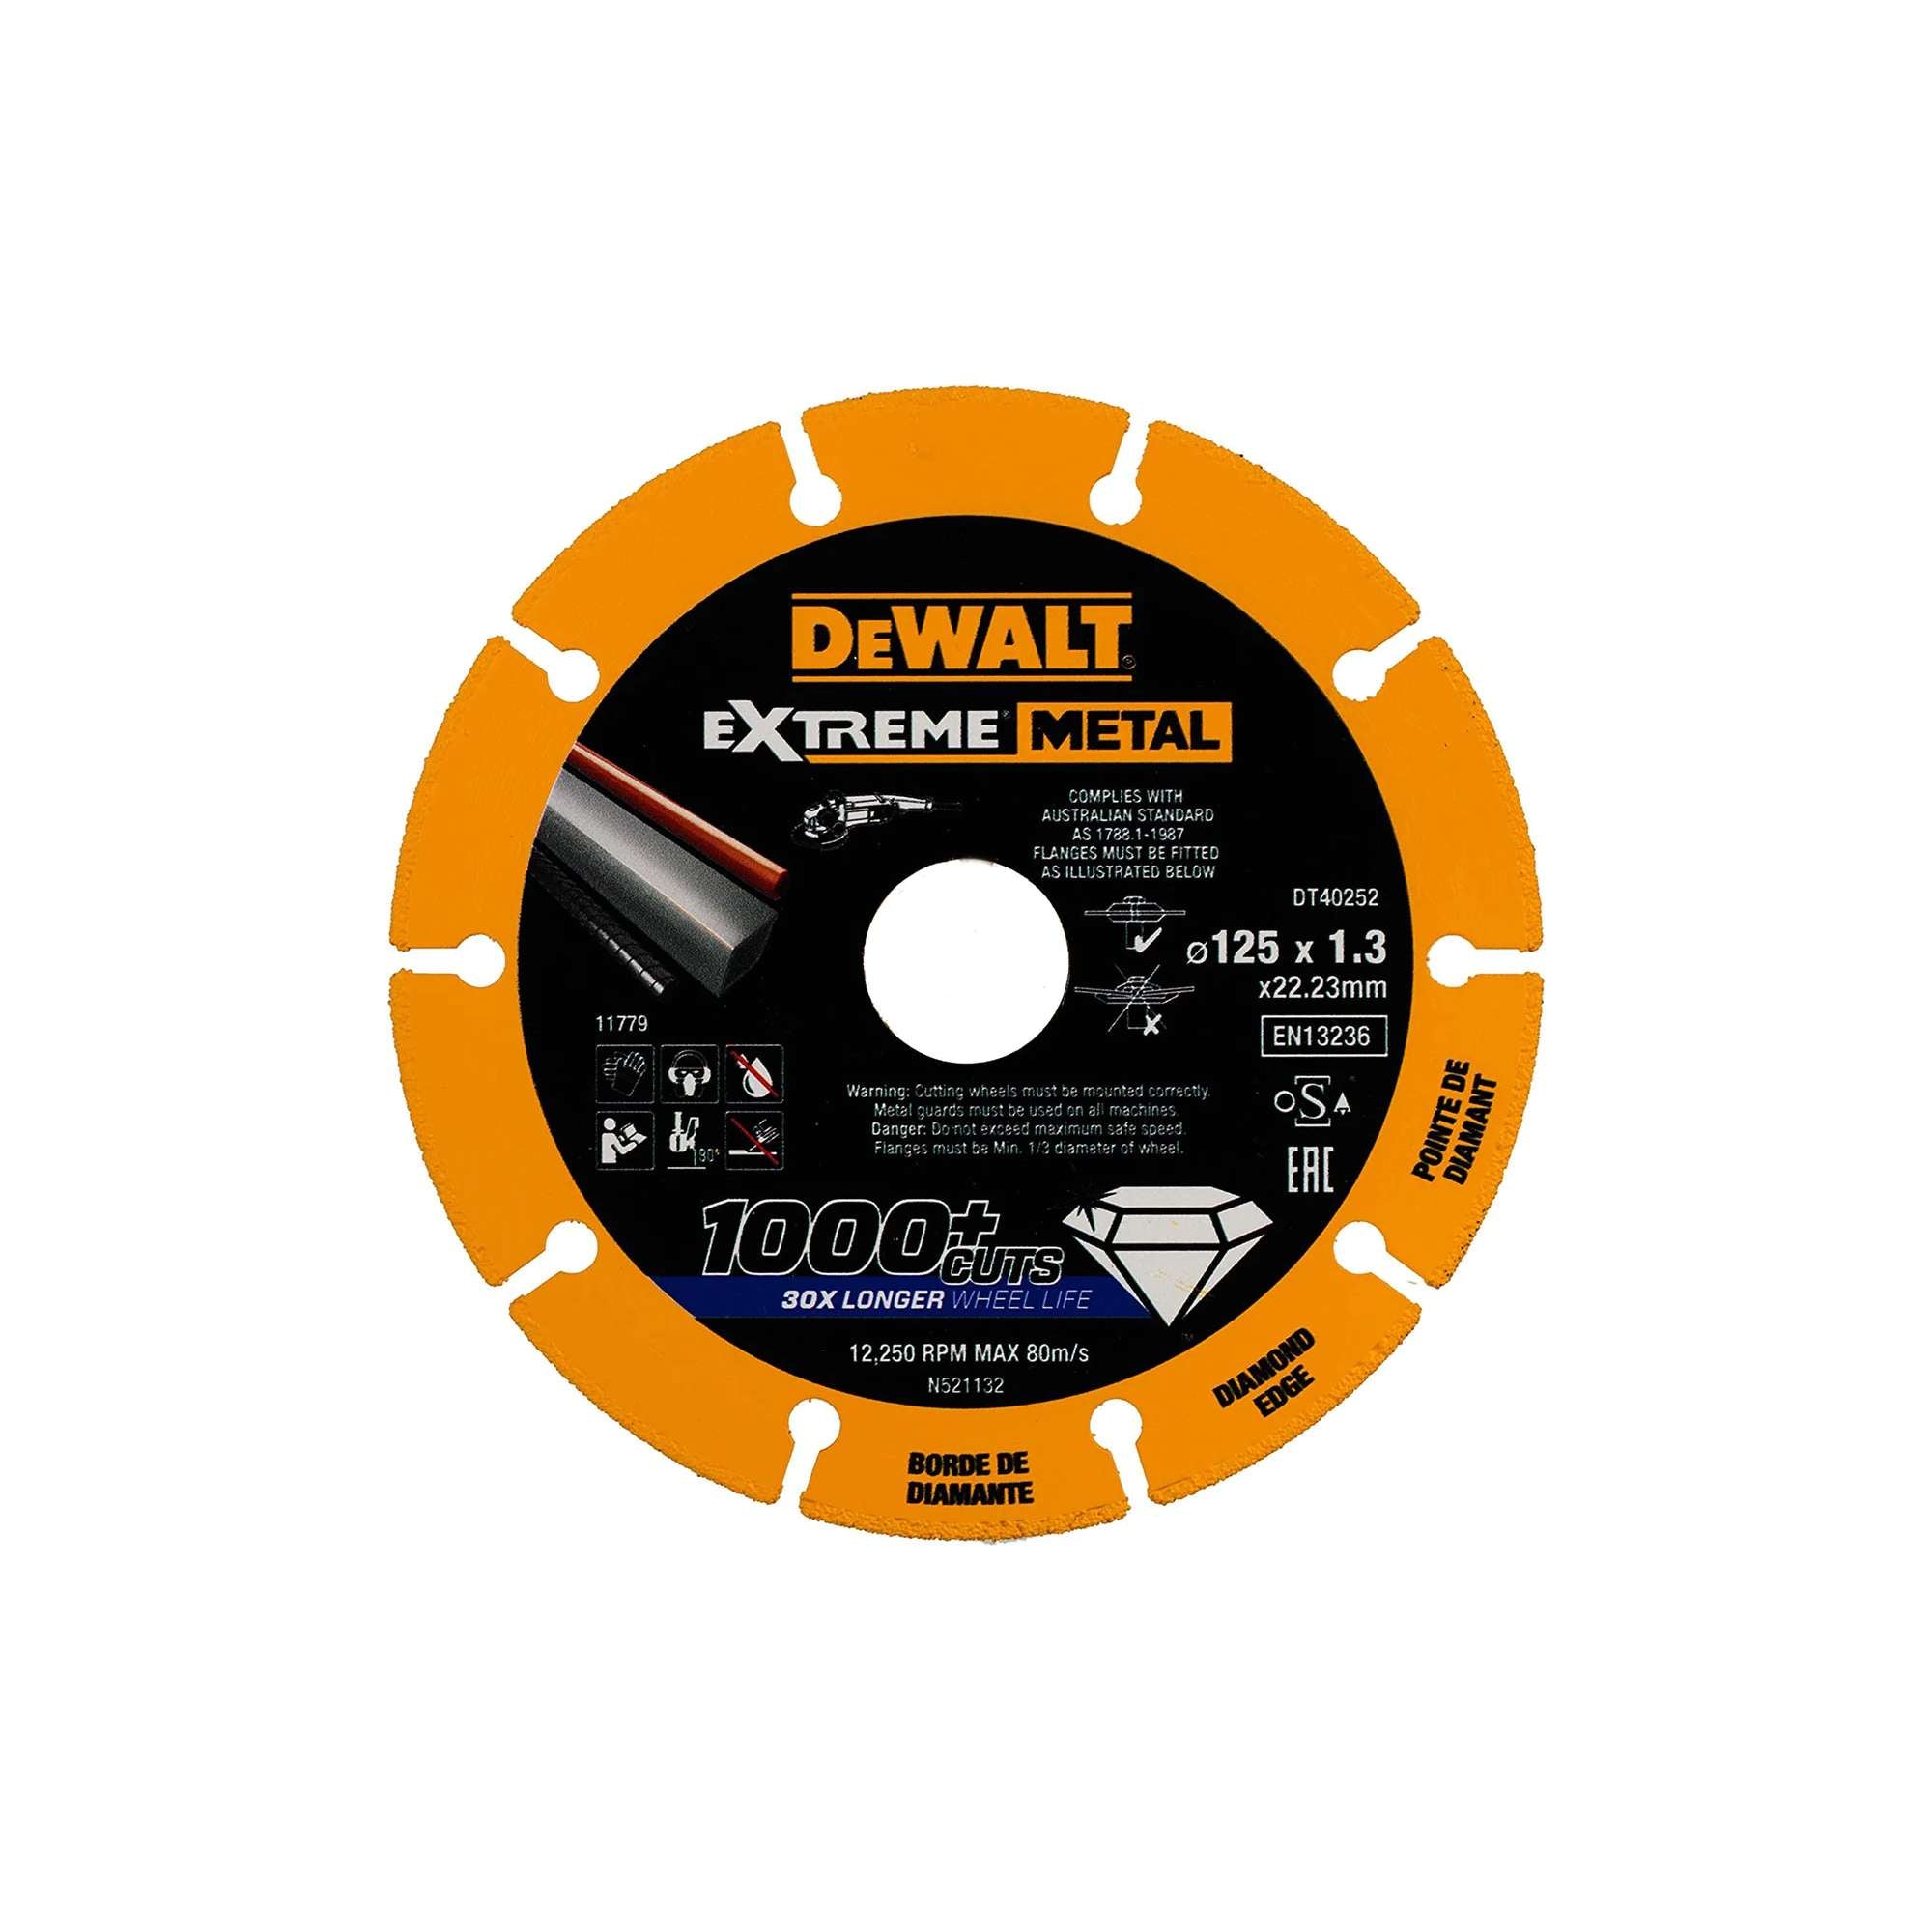 DEWALT disc dt40251-qz 115 x 1.3 mm